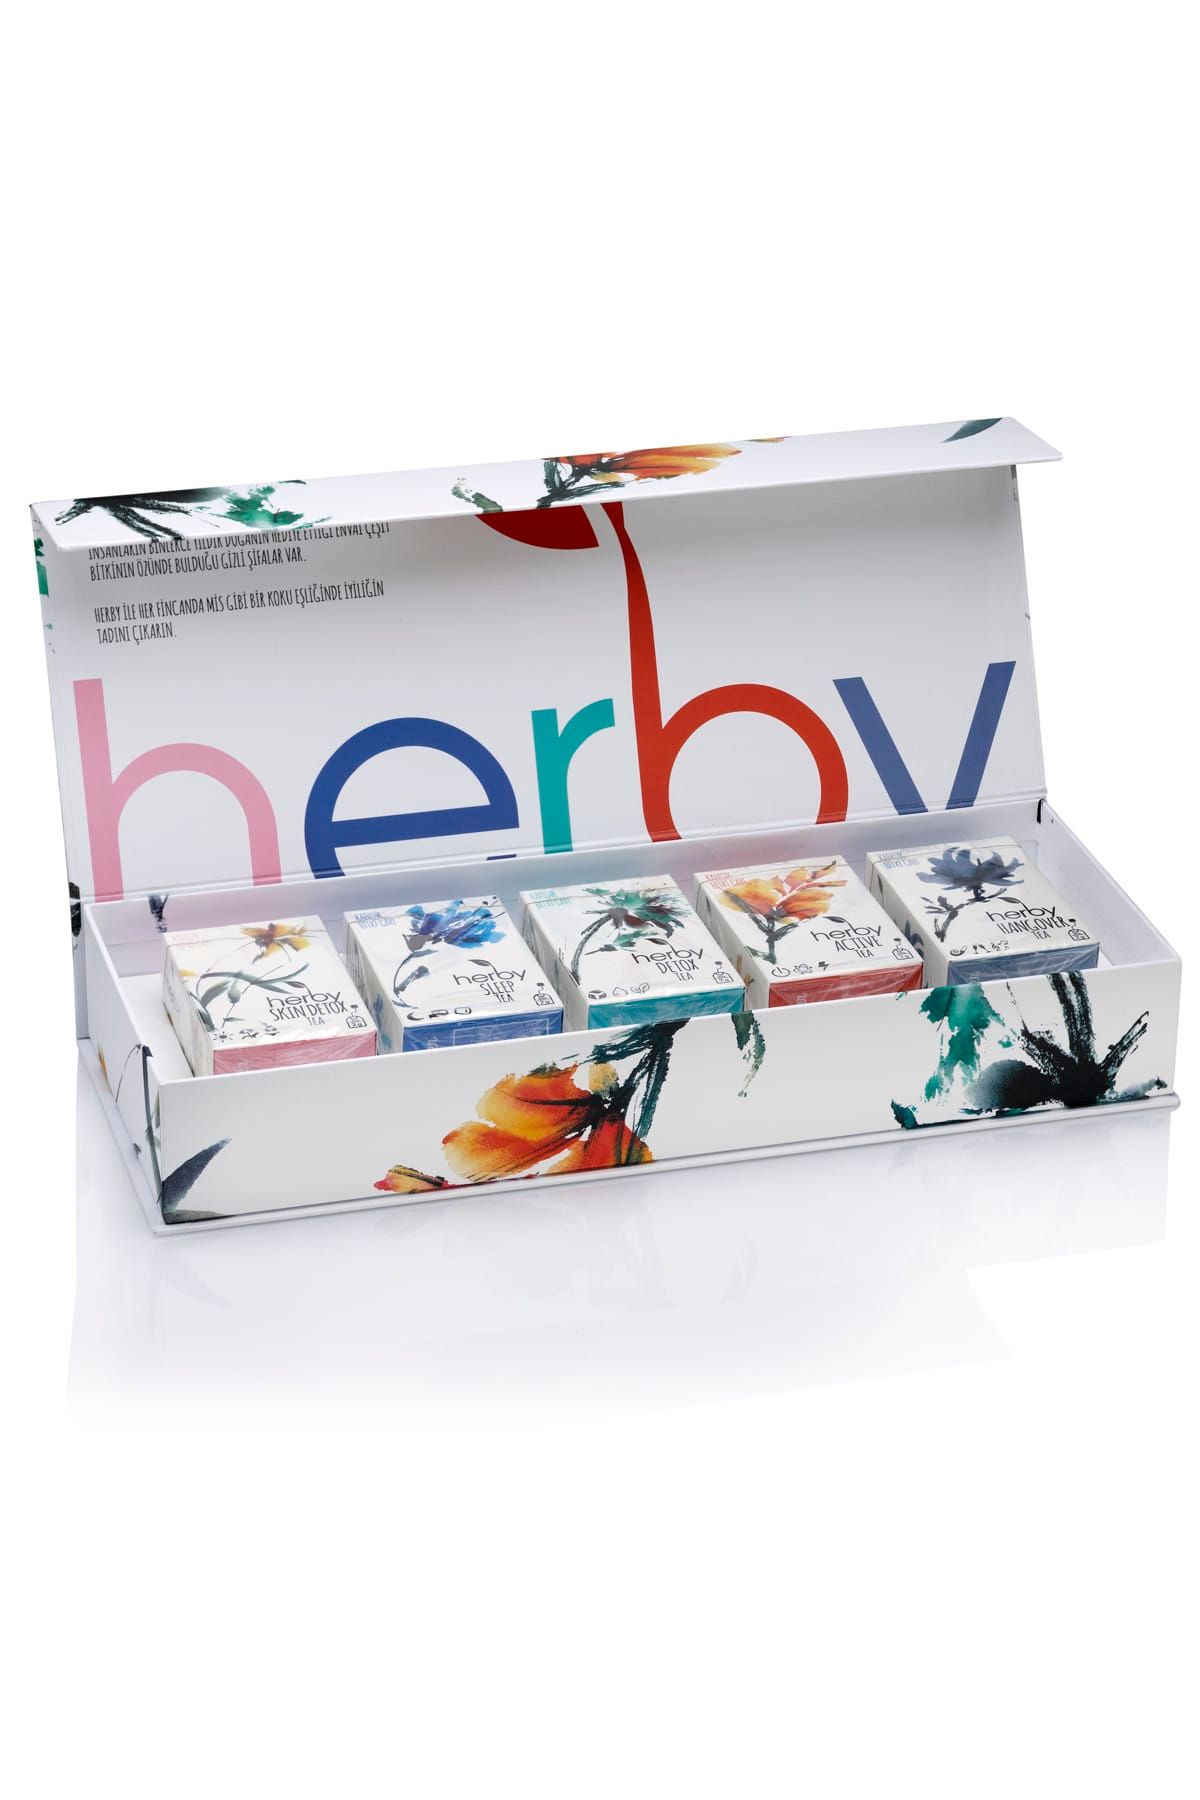 Herby Hediye Kutusu - Gift Box